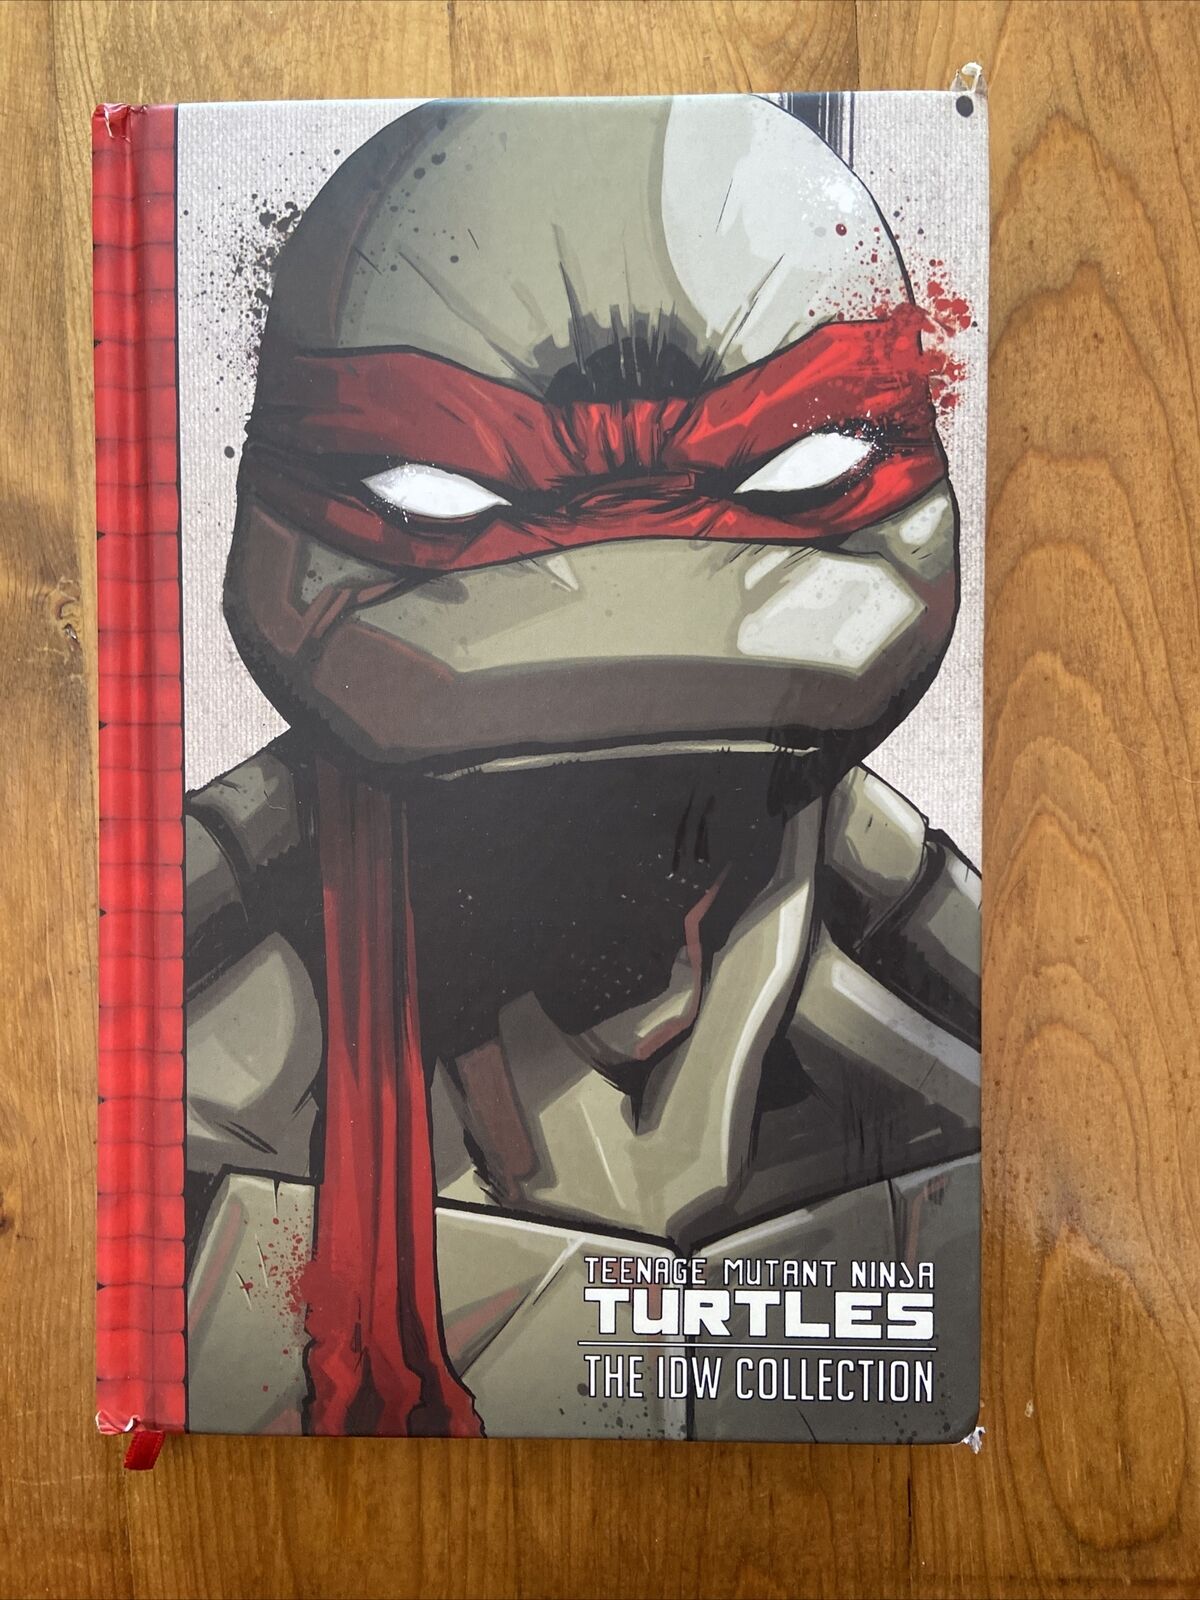 Teenage Mutant Ninja Turtles: the IDW Collection #1 (IDW Publishing June 2015)